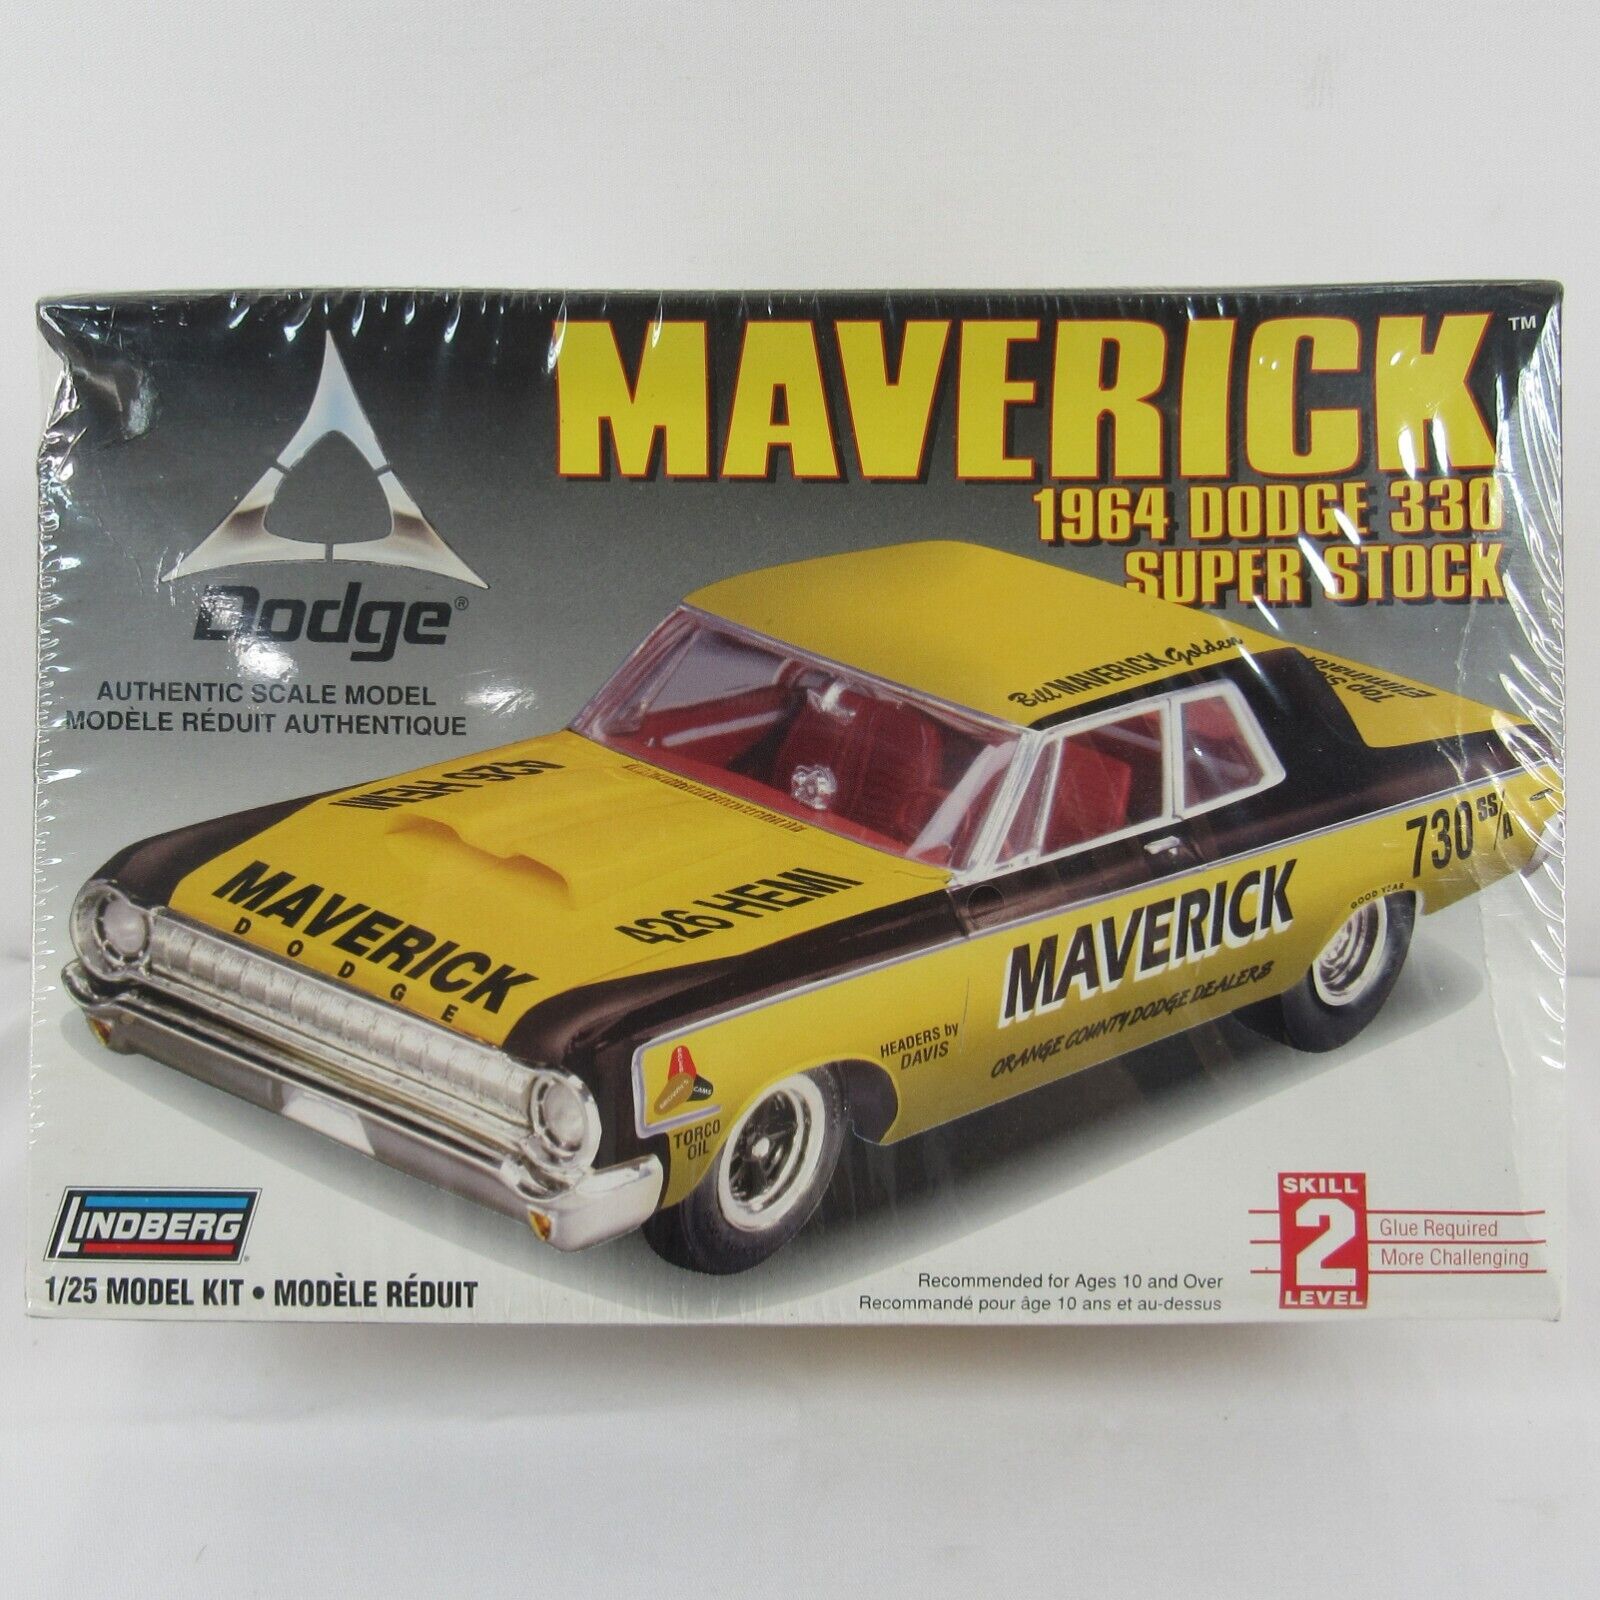 Maverick 1964 Dodge 330 Super Stock HEMI Lindberg 1:25 Scale Model Kit Hot Rod